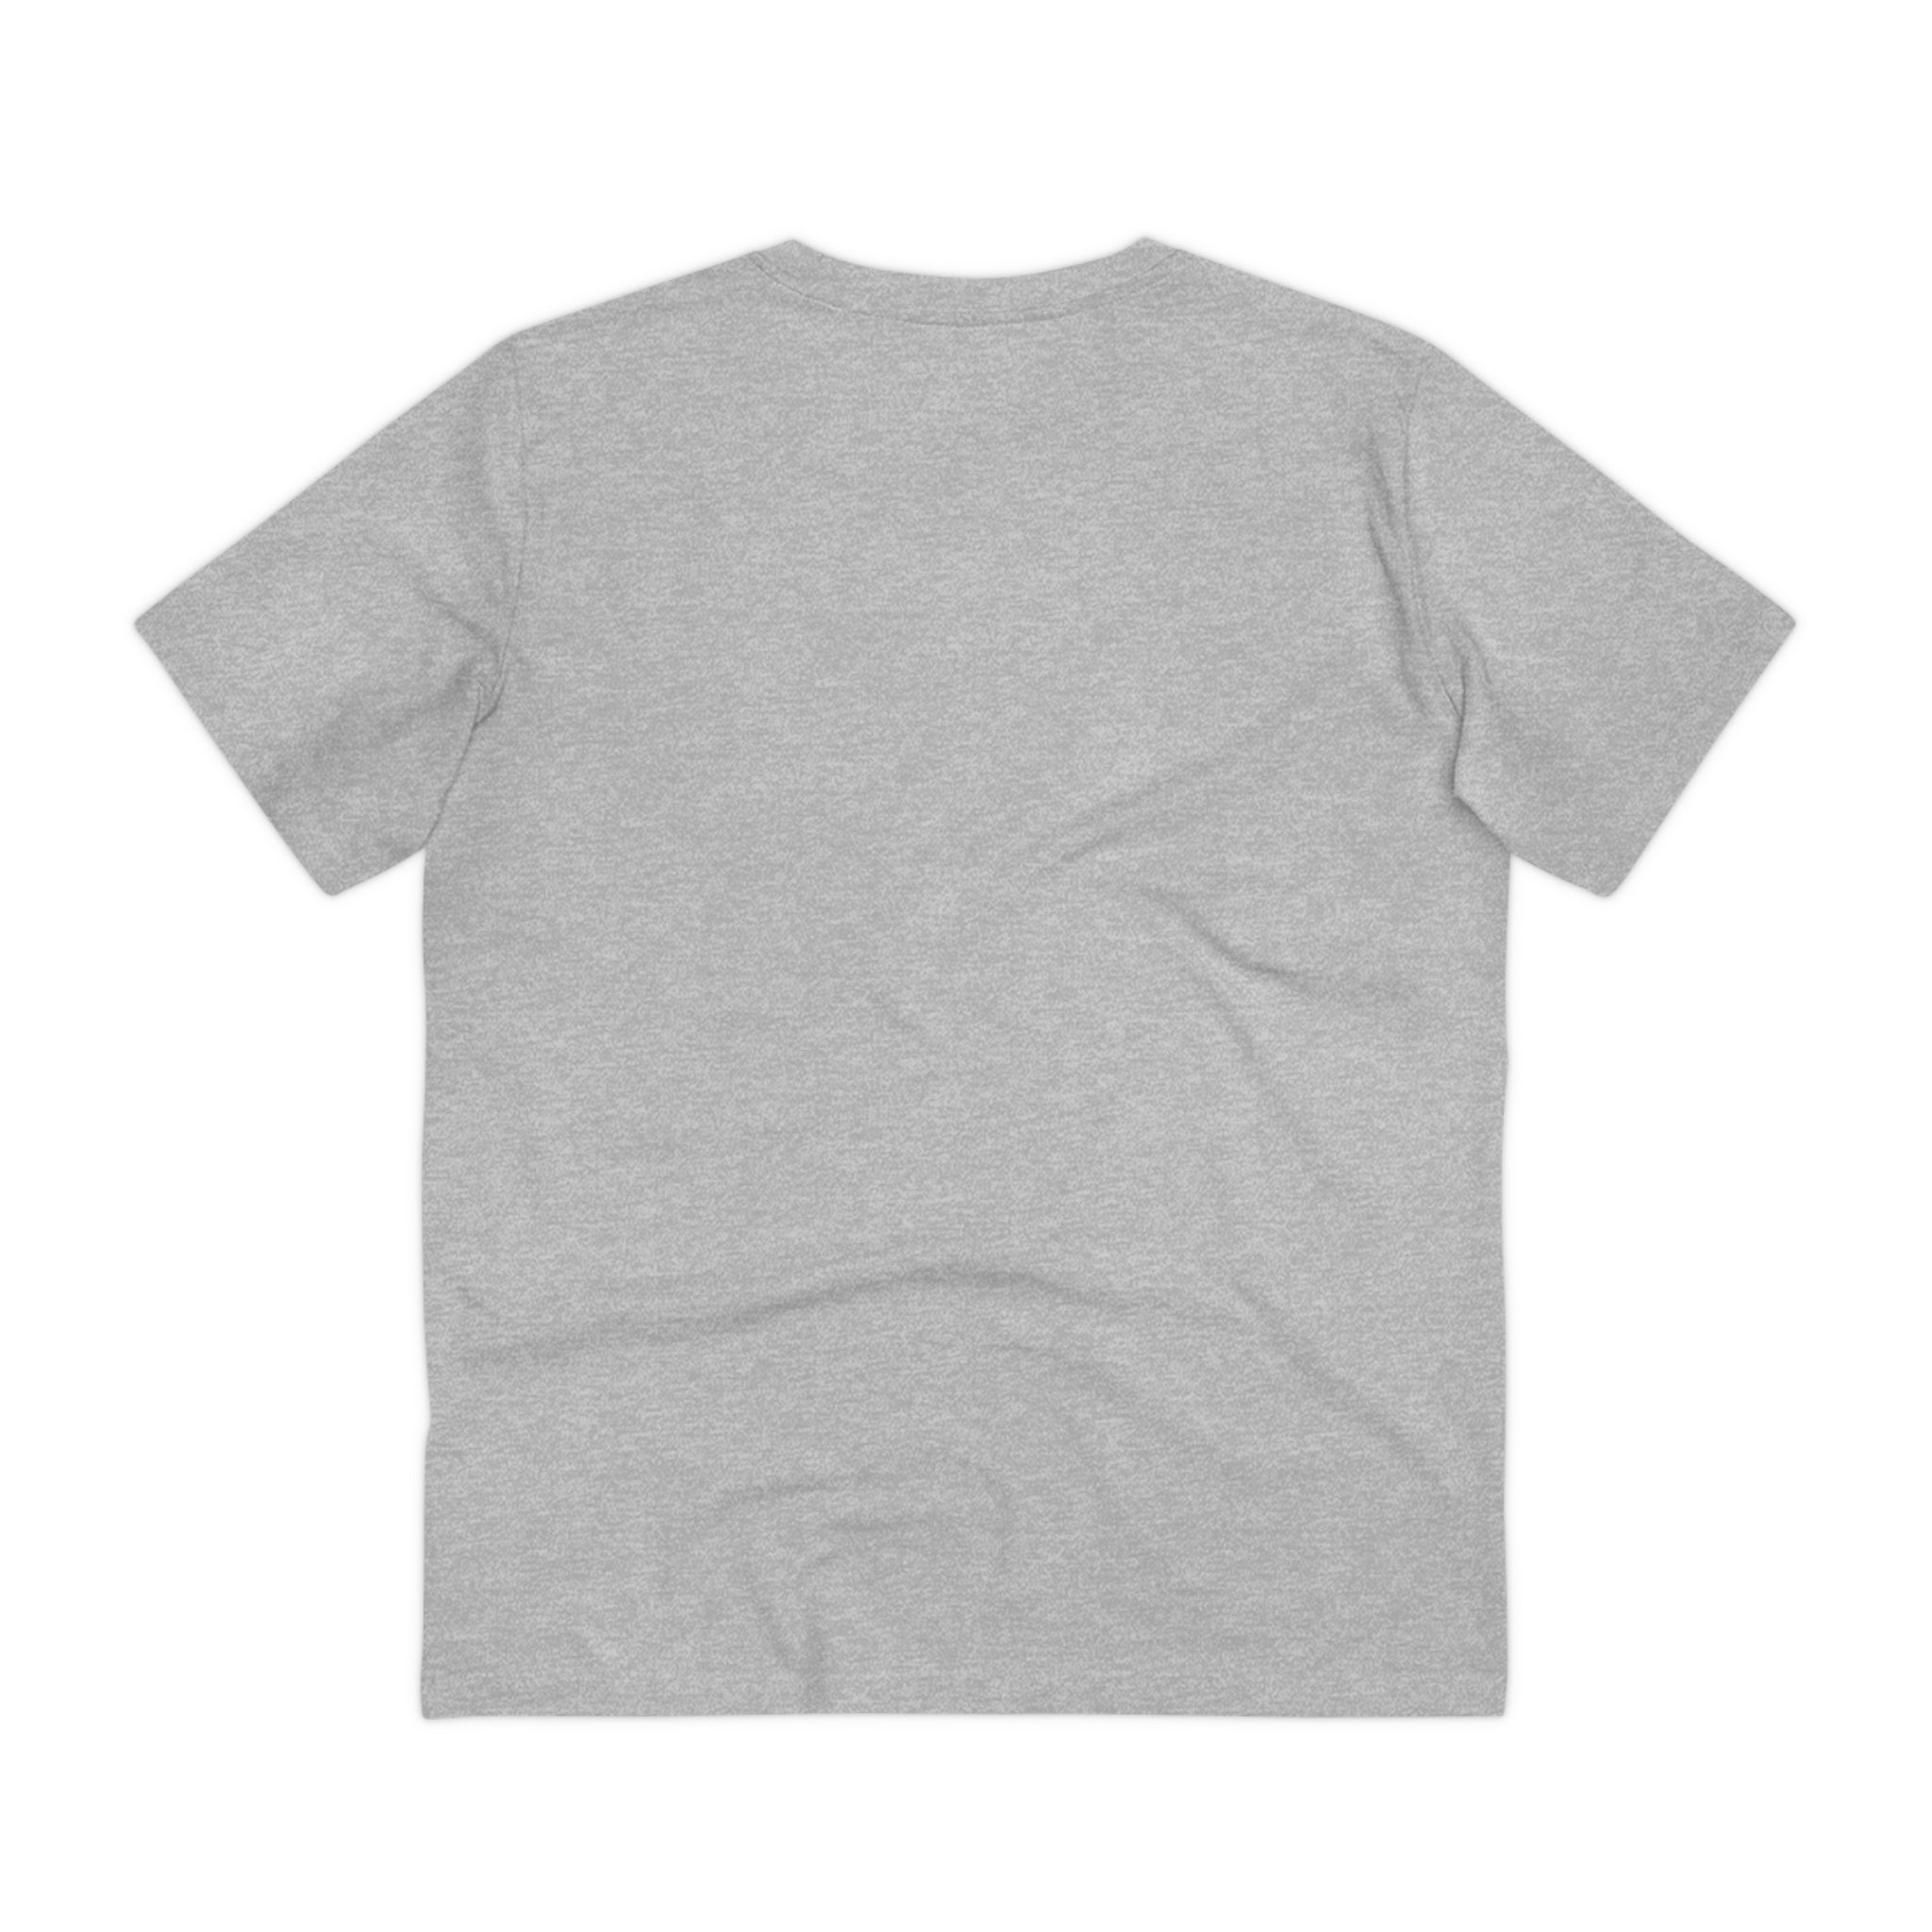 Justabarth T-Shirt #1